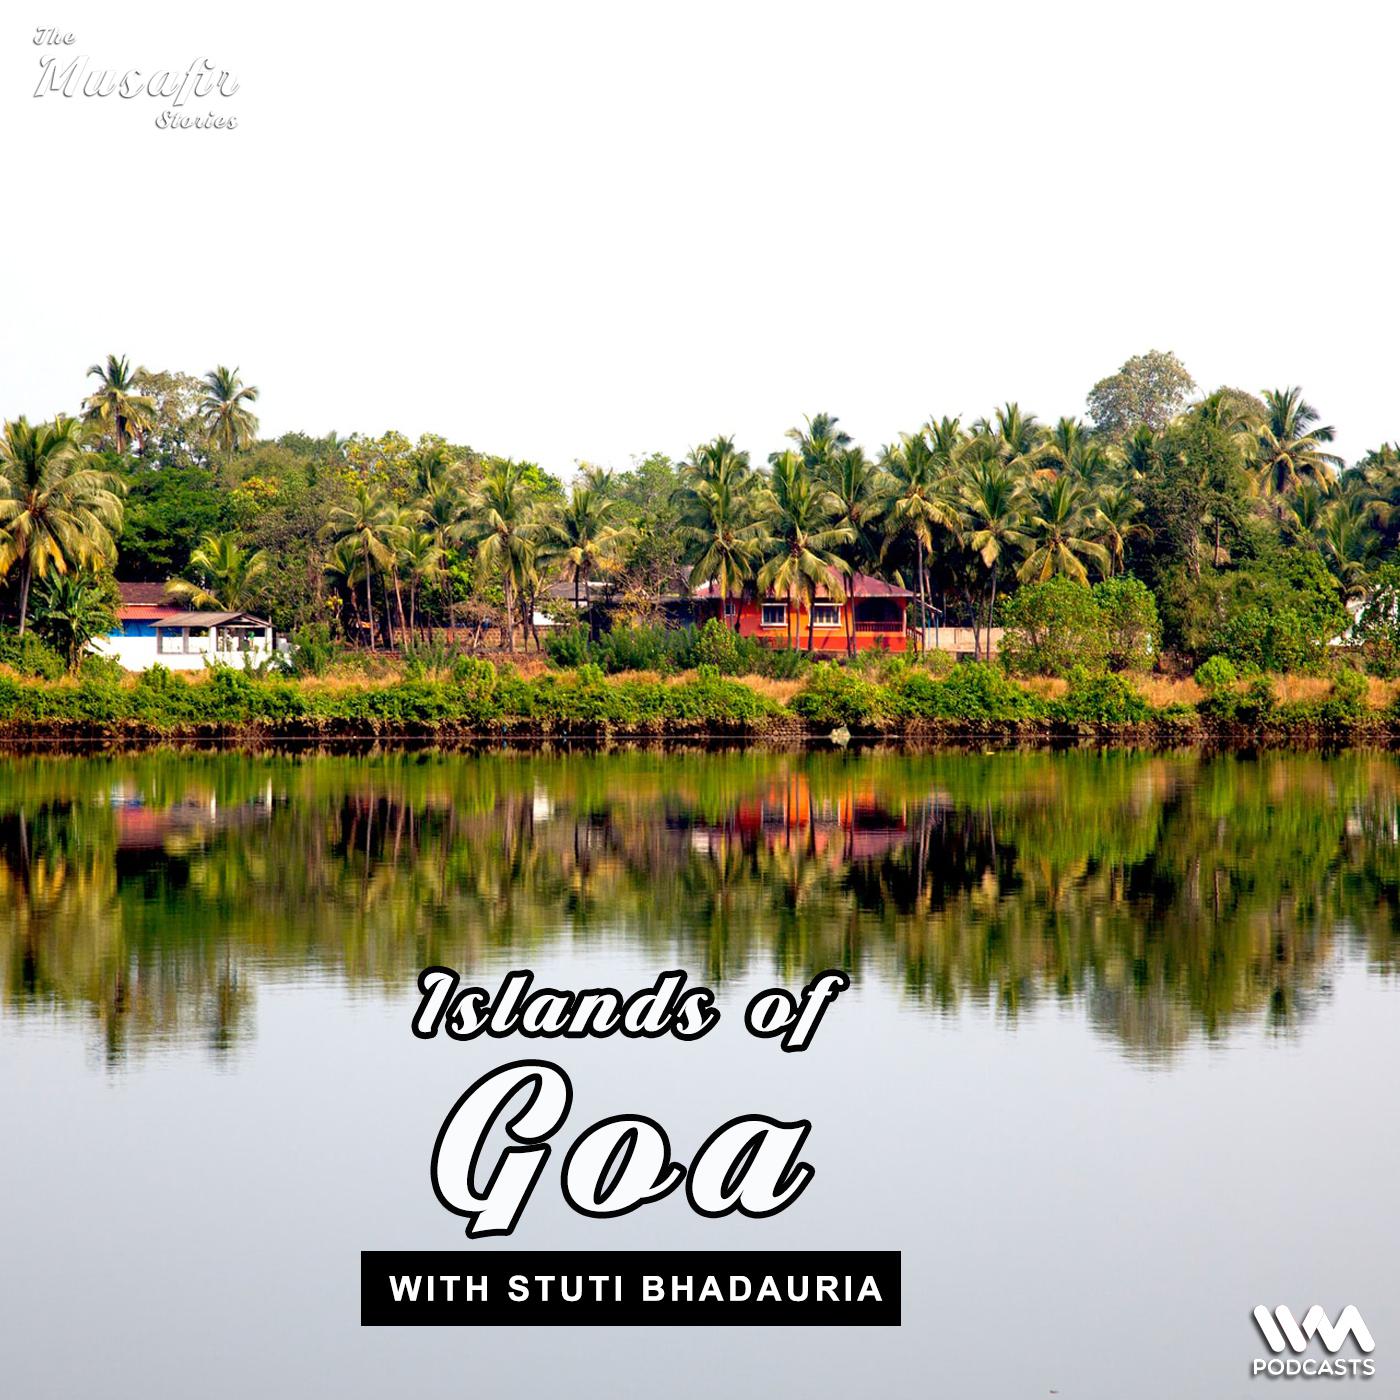 Islands of Goa with Stuti Bhadauria